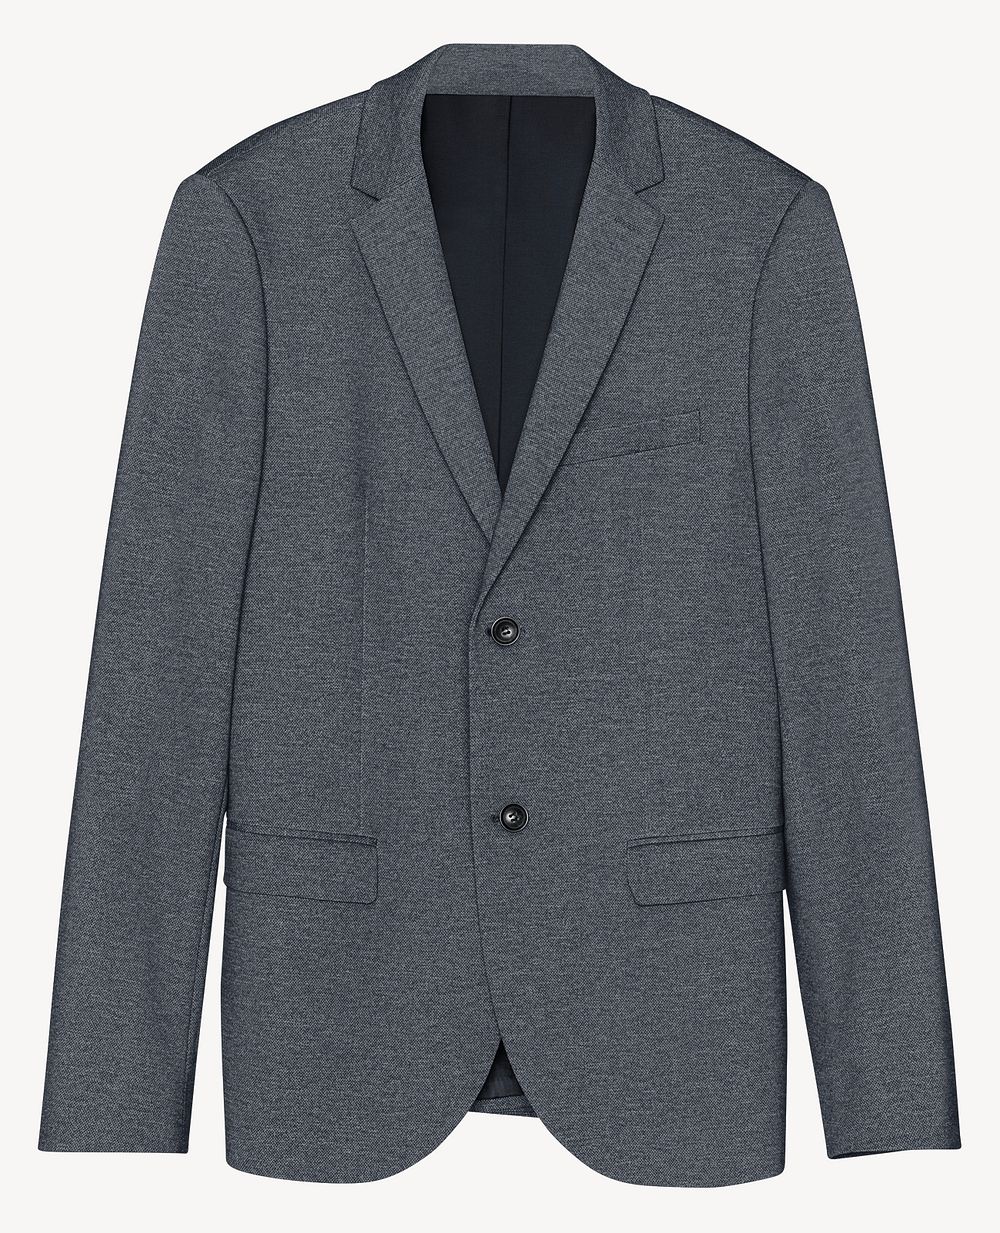 Men's gray suit mockup, business attire design psd